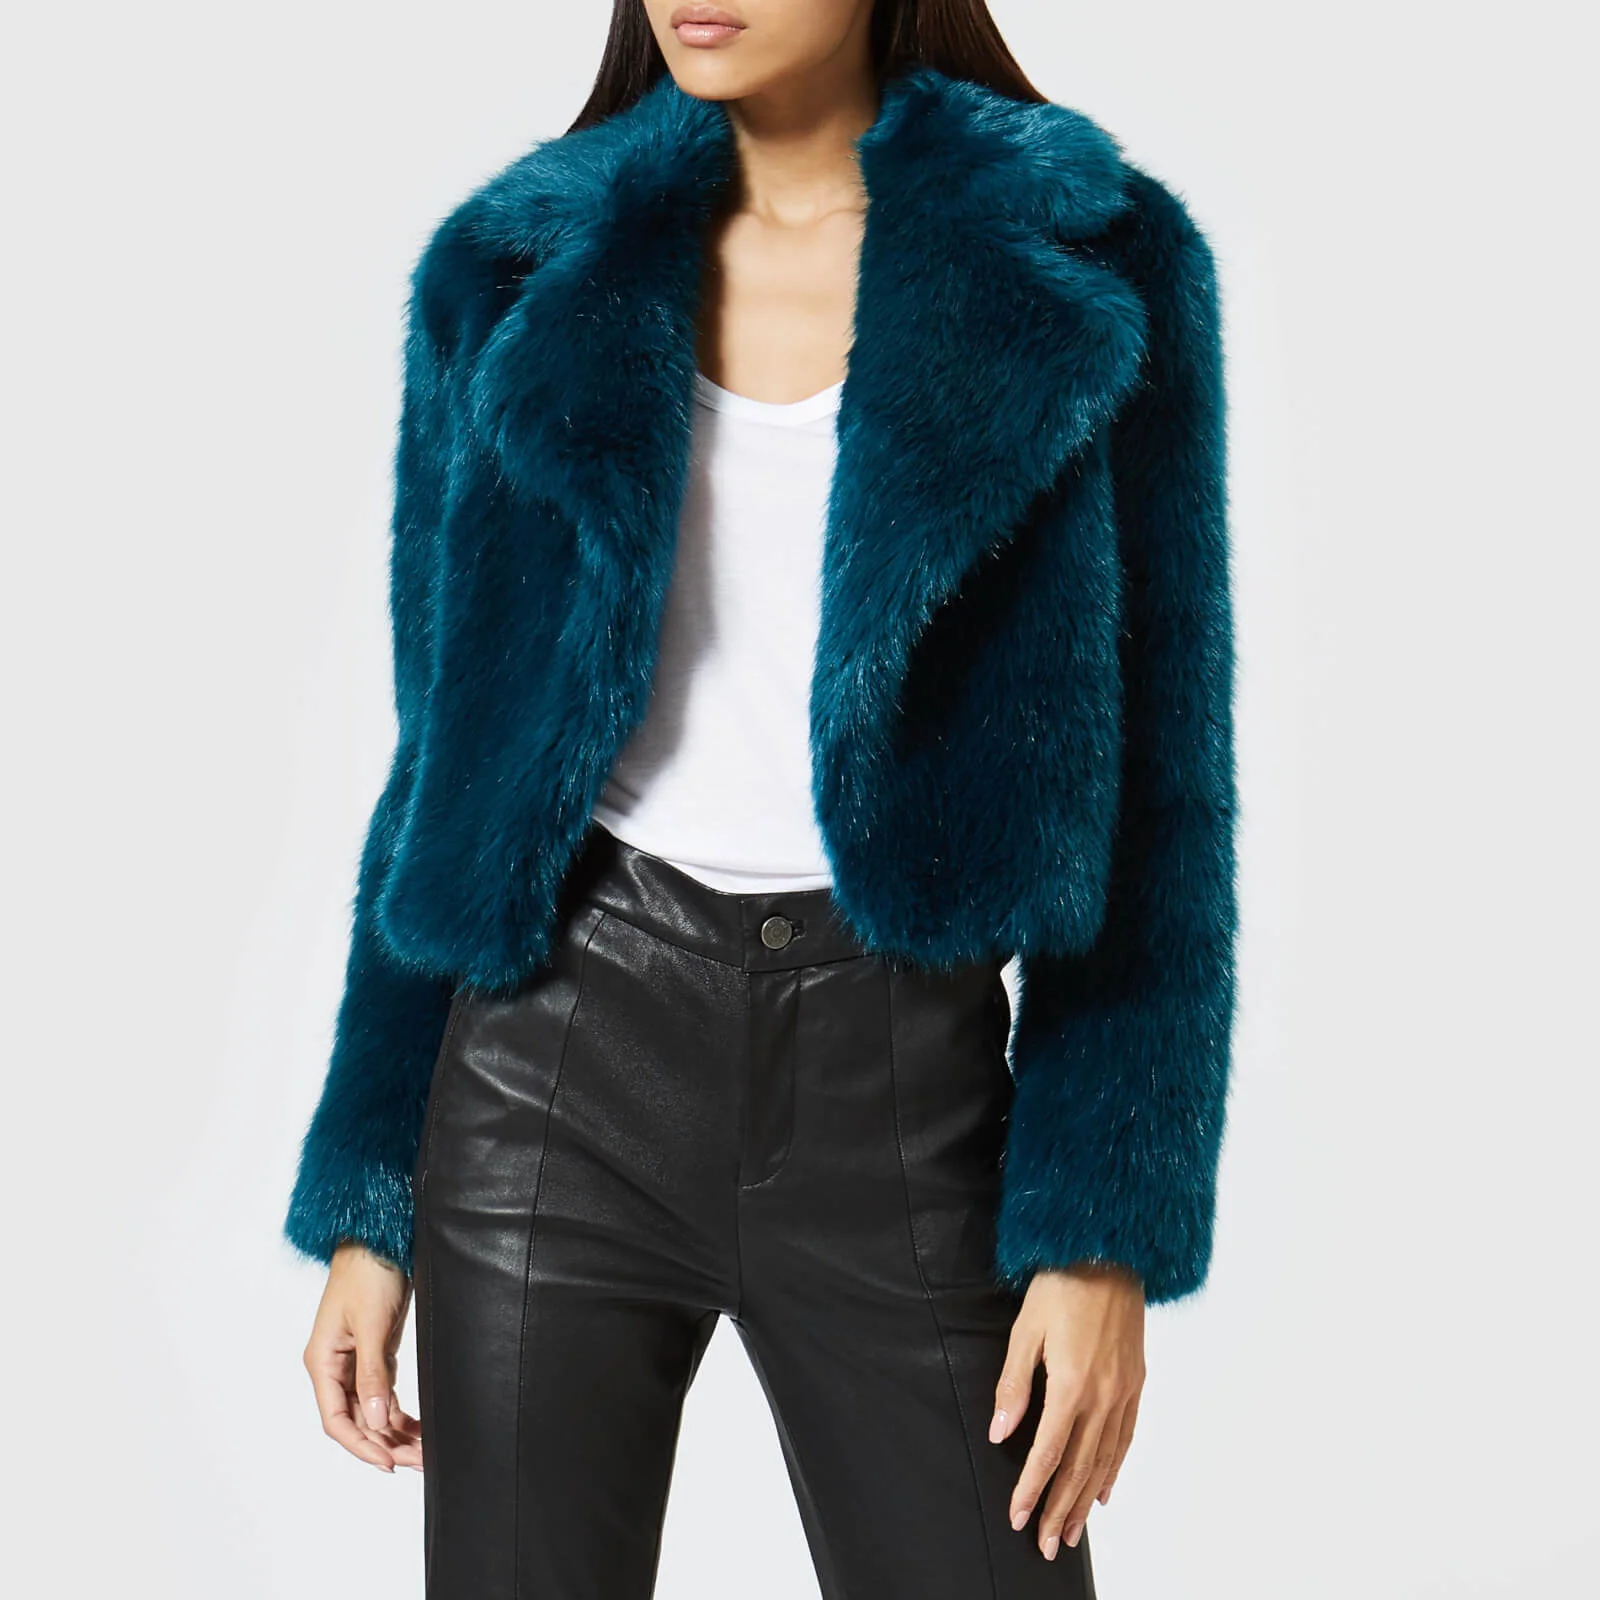 MICHAEL MICHAEL KORS Women's Cropped Fur Jacket - Lux Teal Image 1